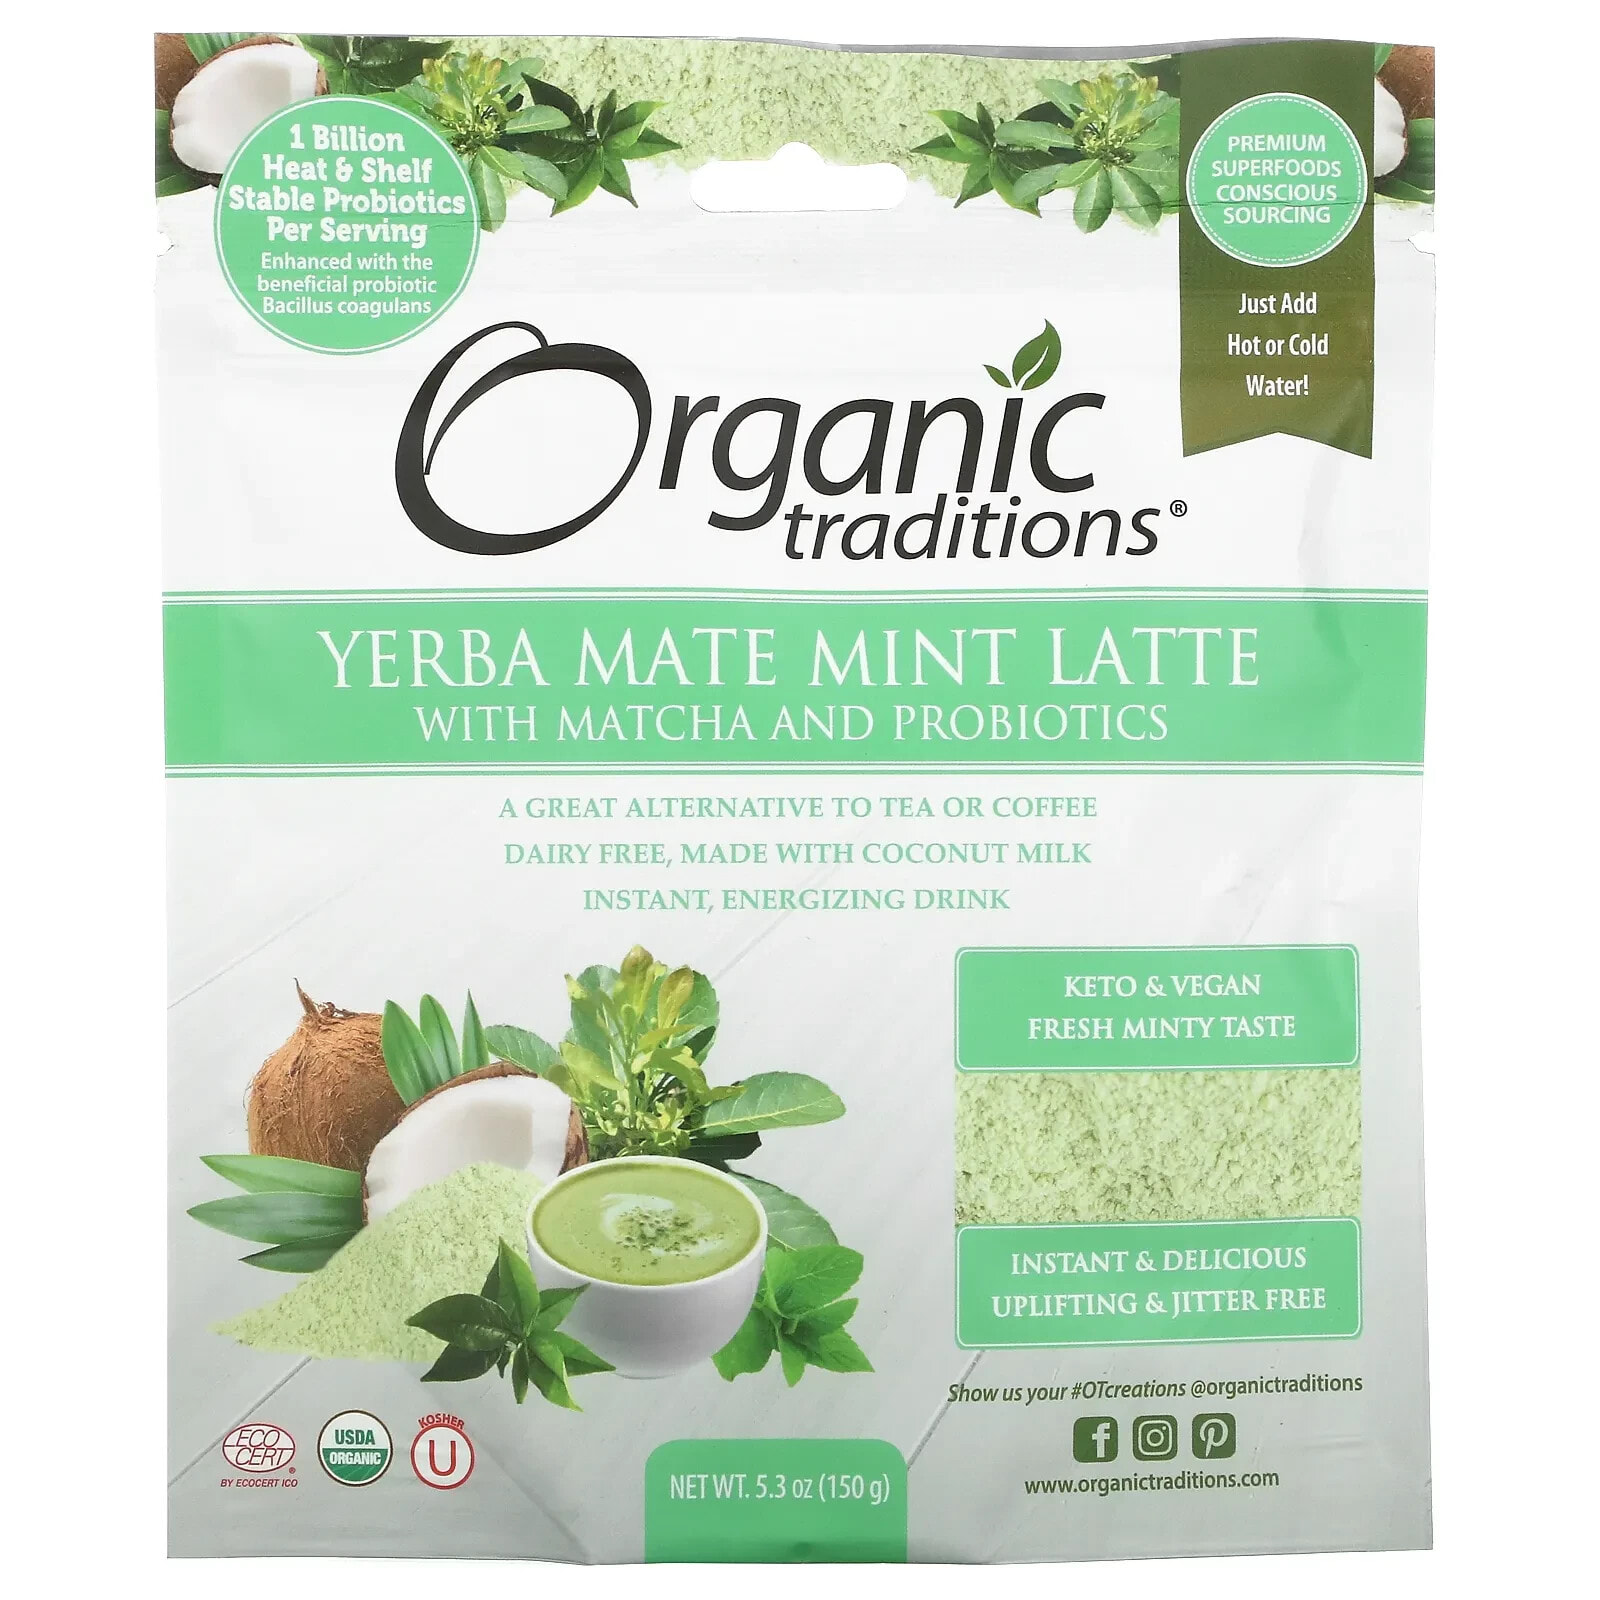 Organic Traditions, Премиум зеленый чай матча, 3,5 унции (100 г)